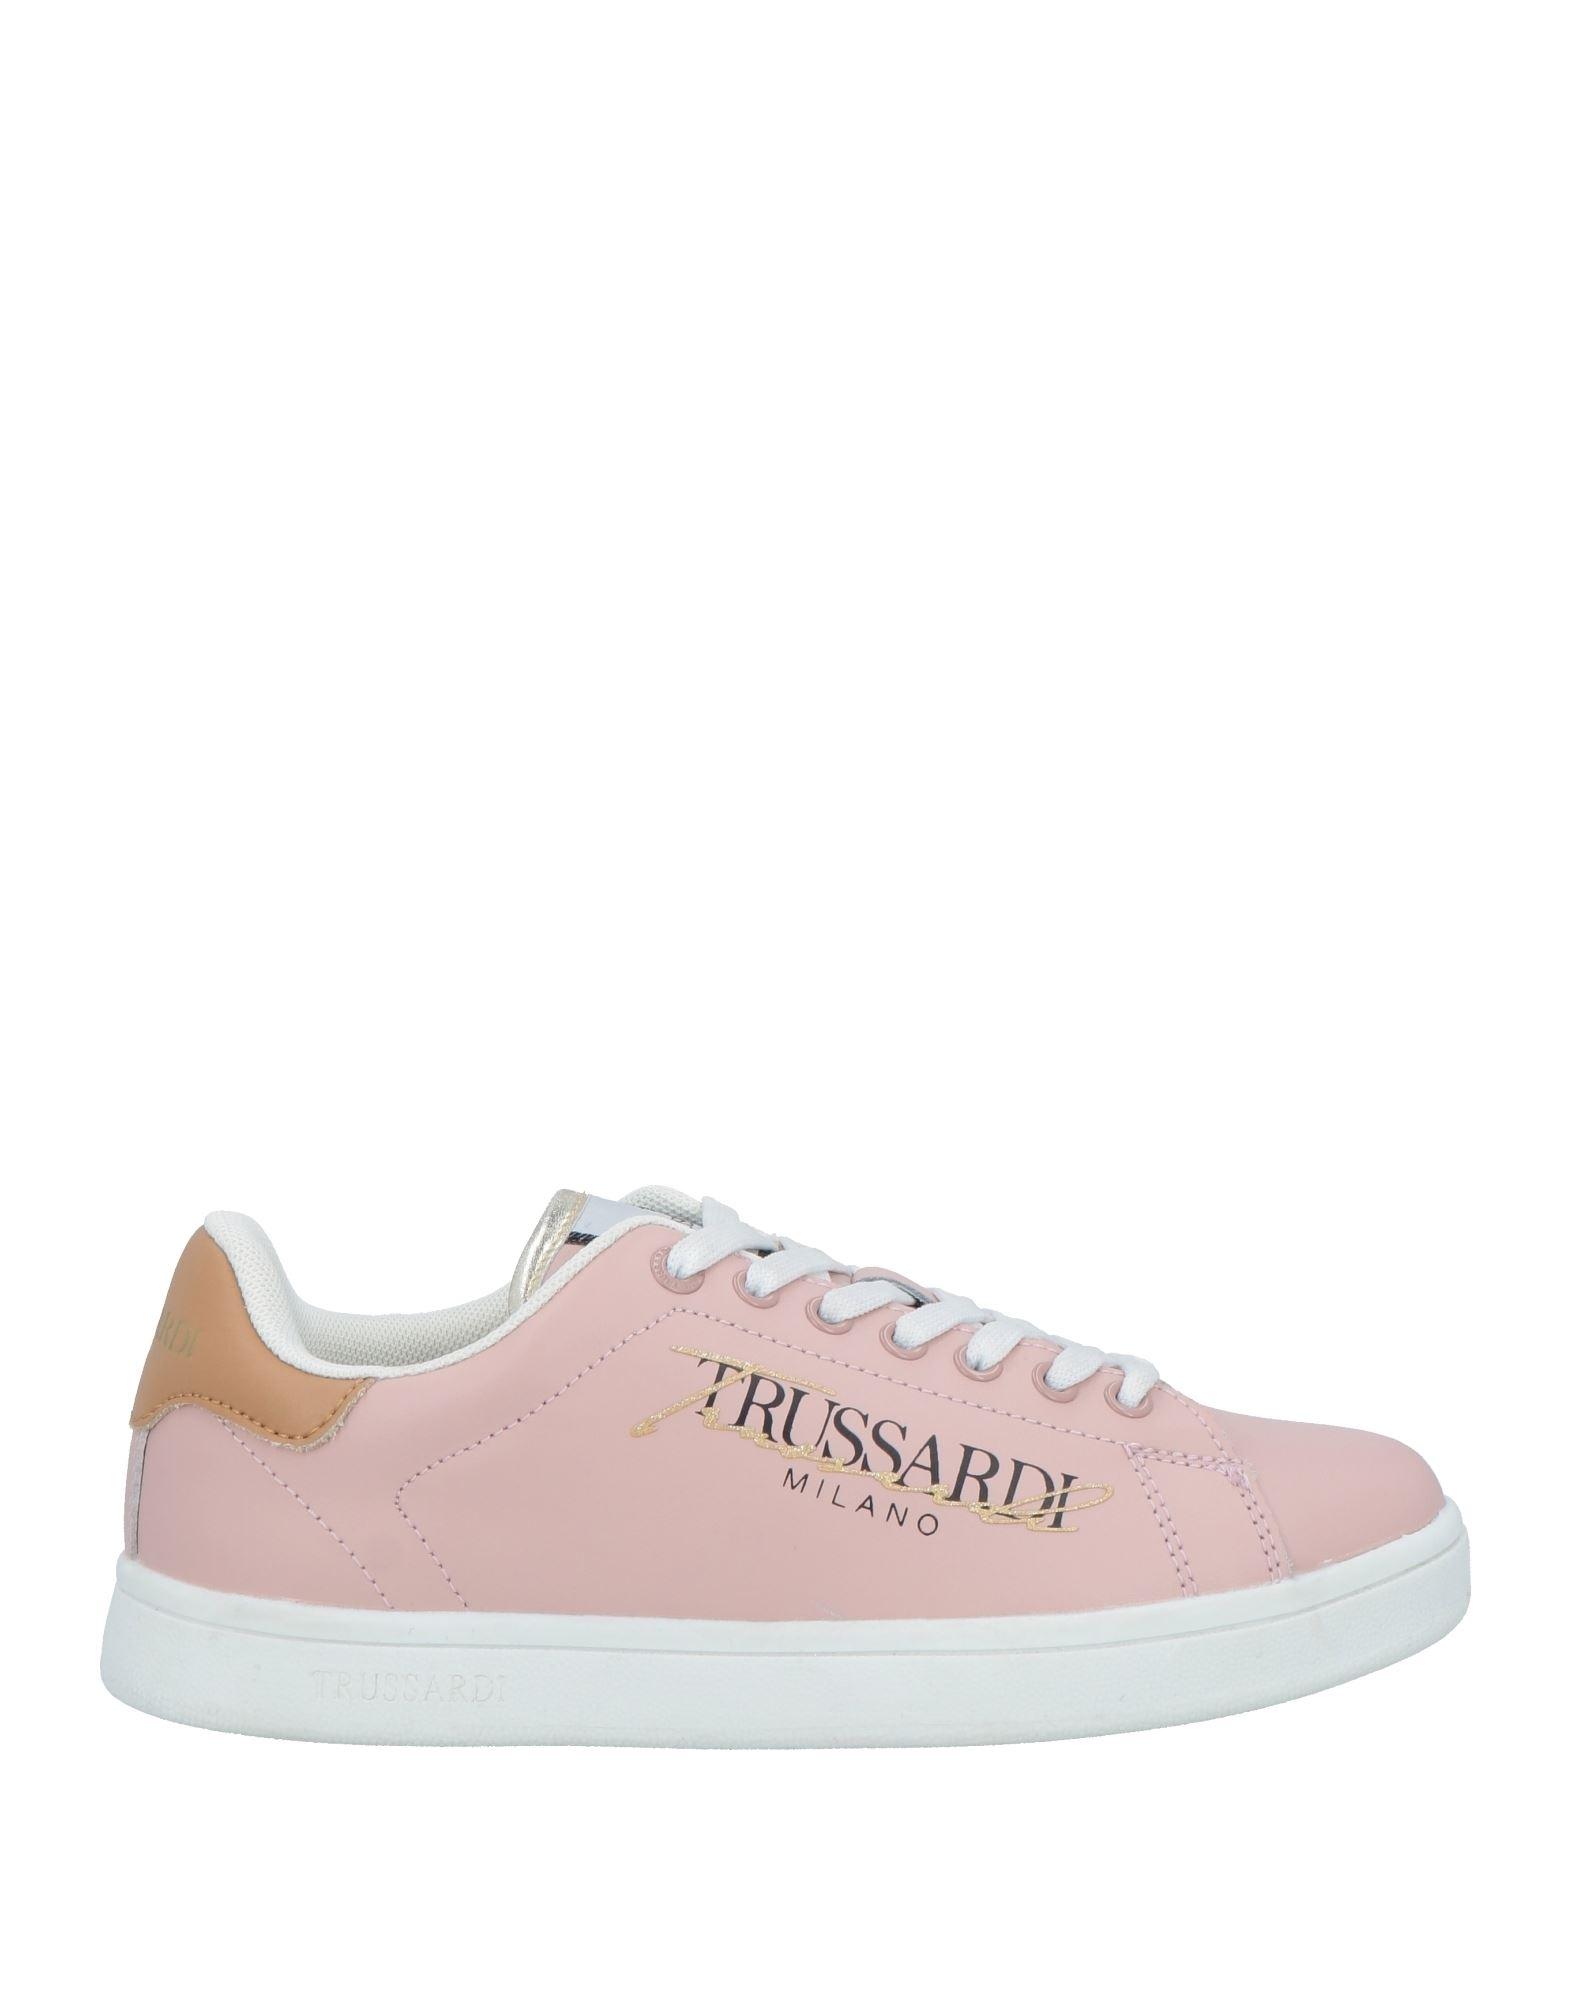 Trussardi Sneakers in Pink | Lyst